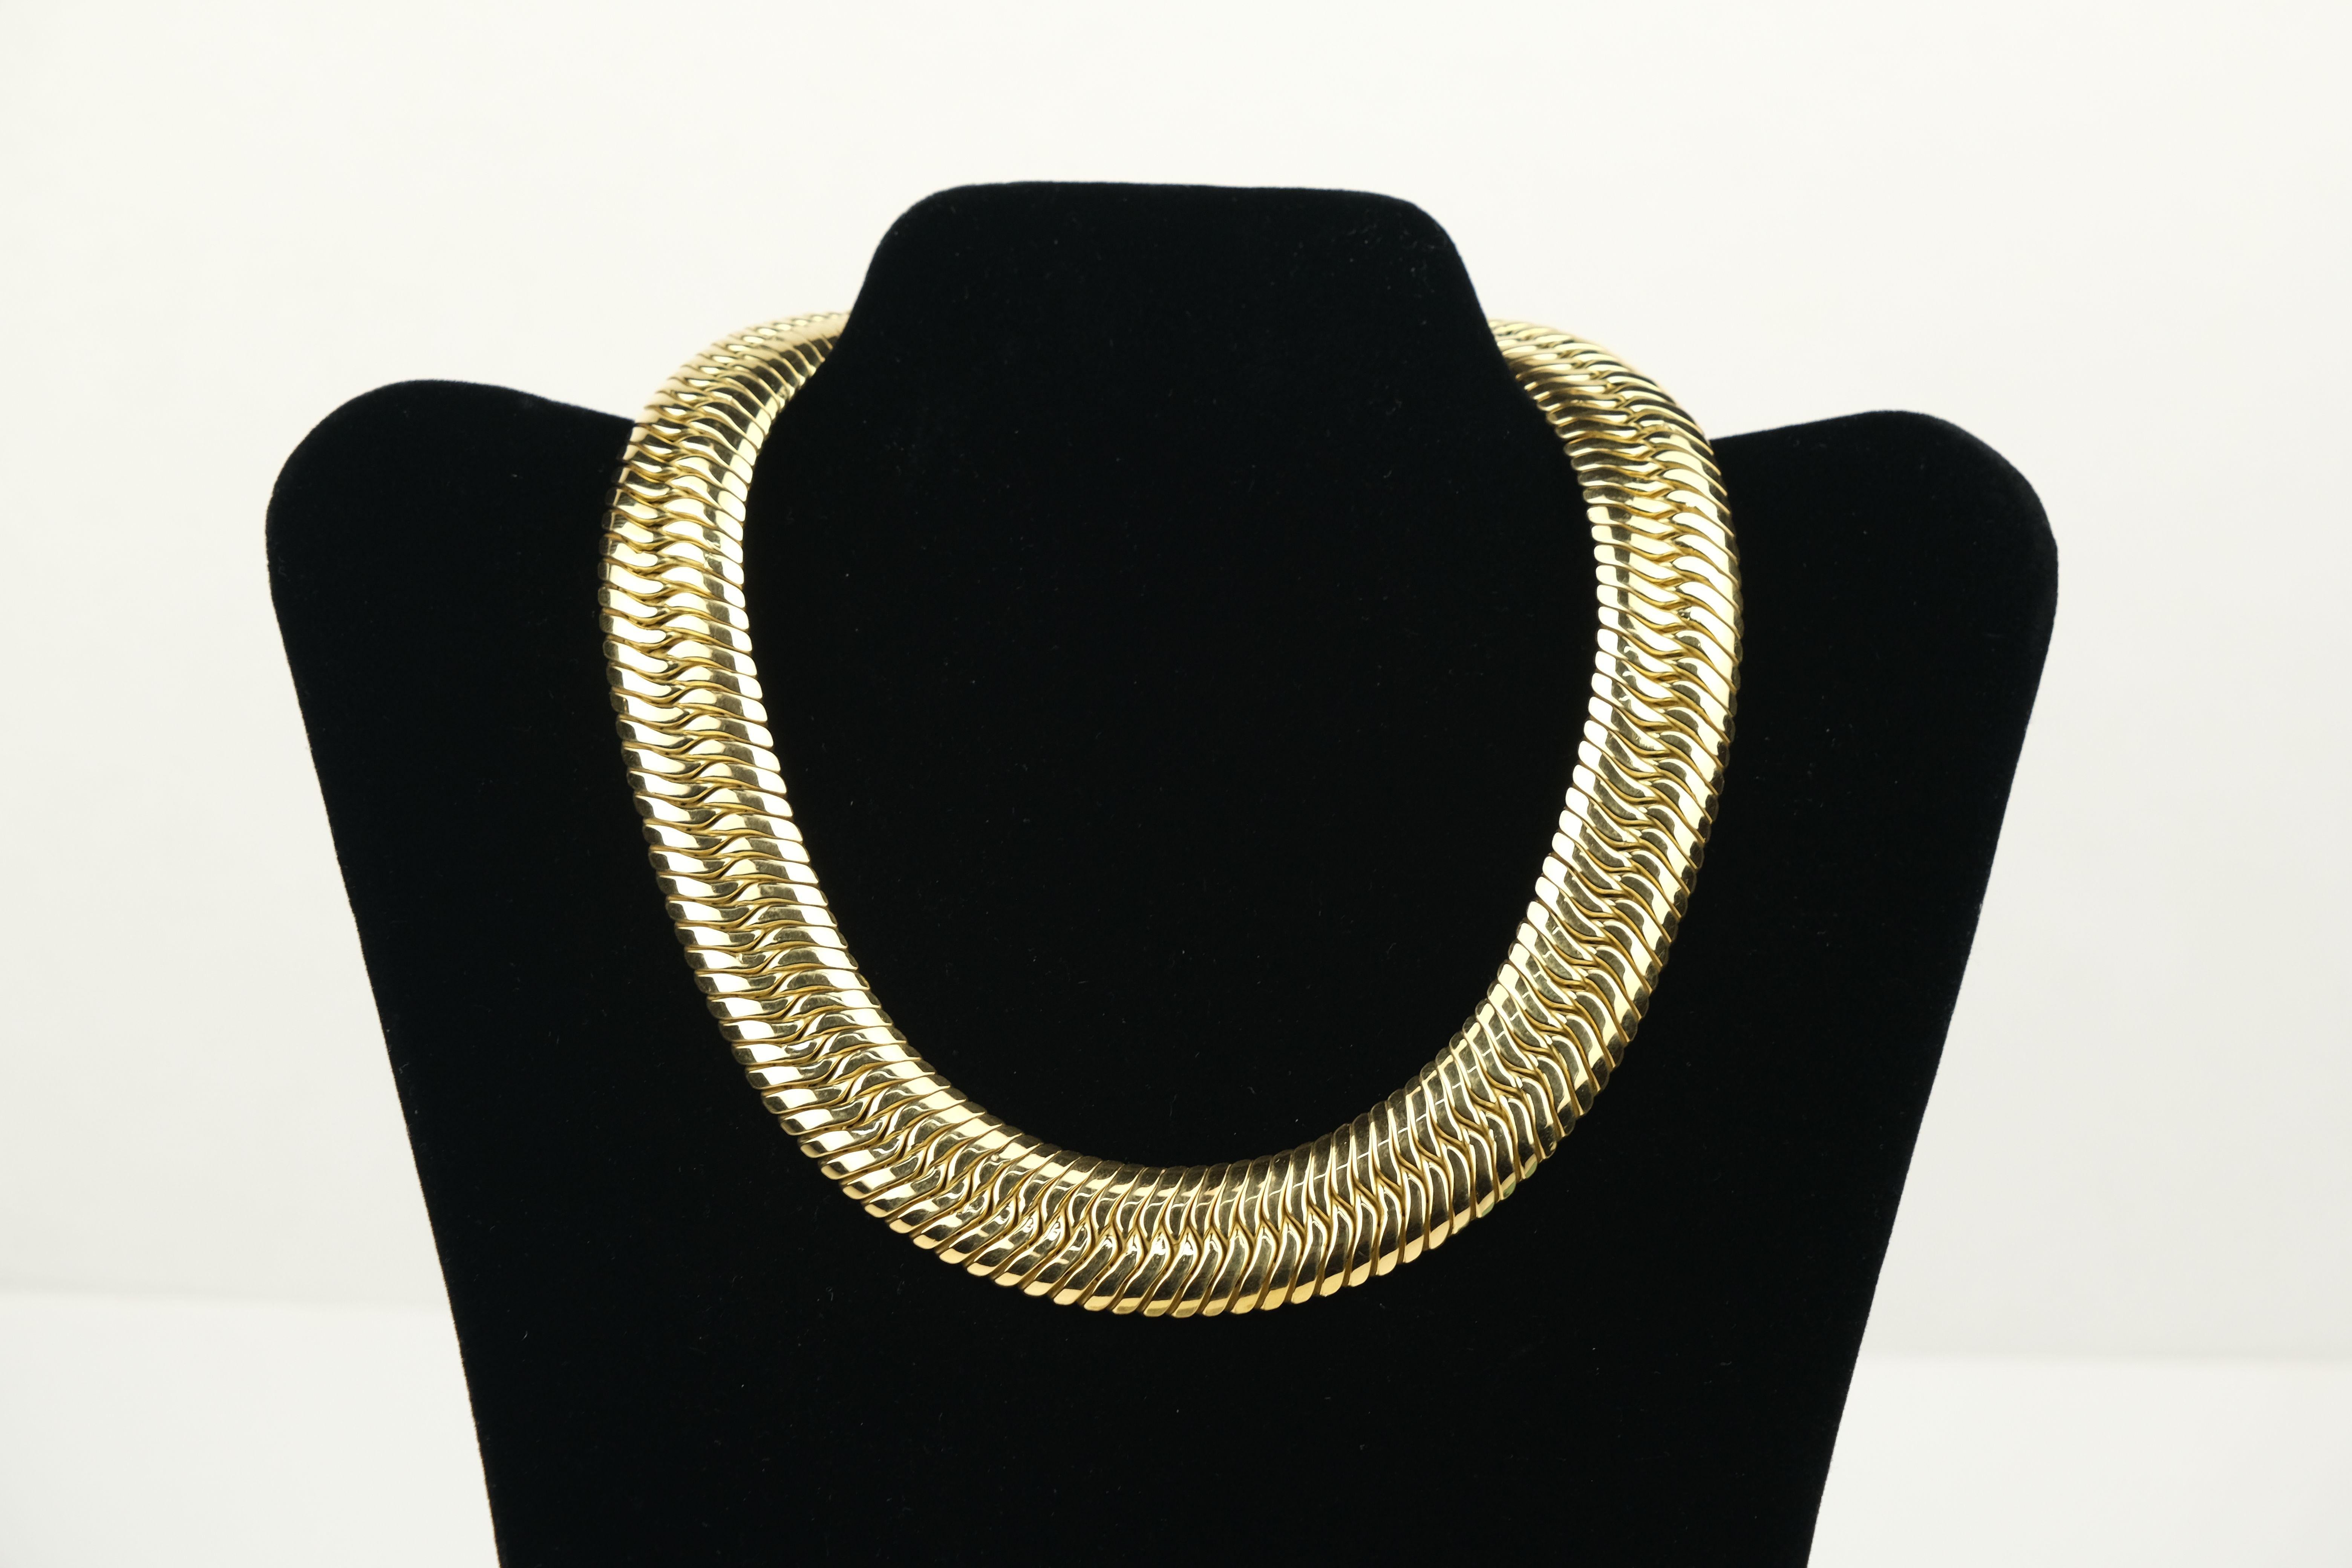 Style: Italian

Materials: 18K Gold

Chain Type: Herringbone

Necklace length: 17.00